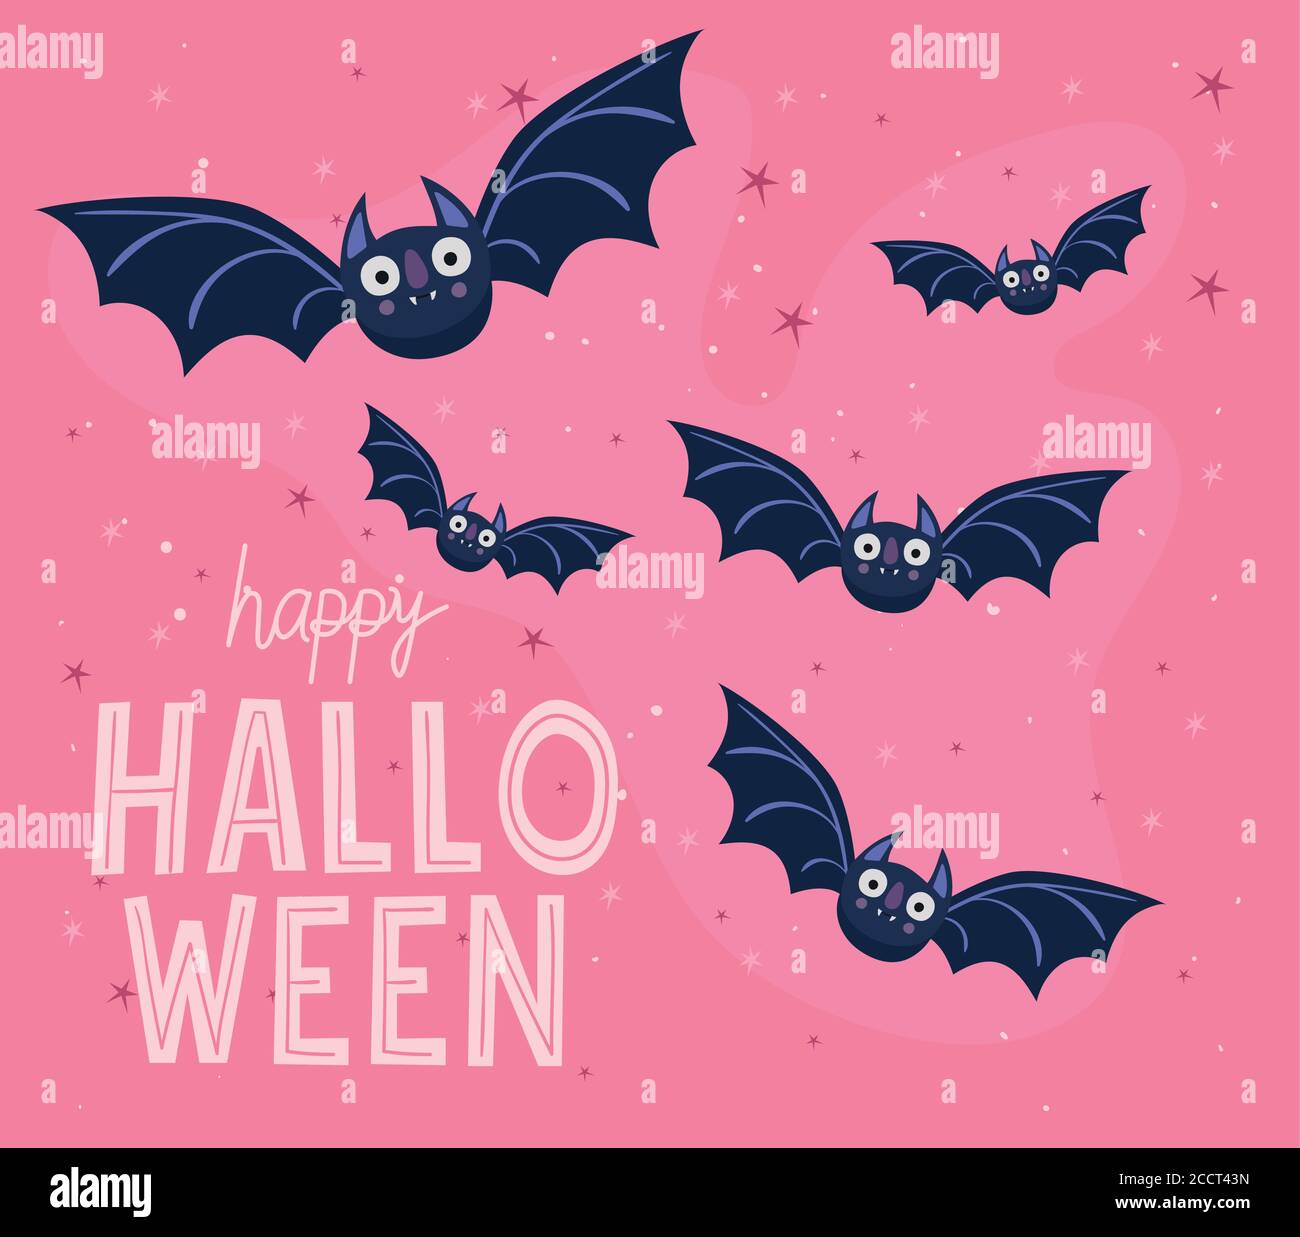 Halloween bats cartoons design, Holiday and scary theme Vector illustration Stock Vector